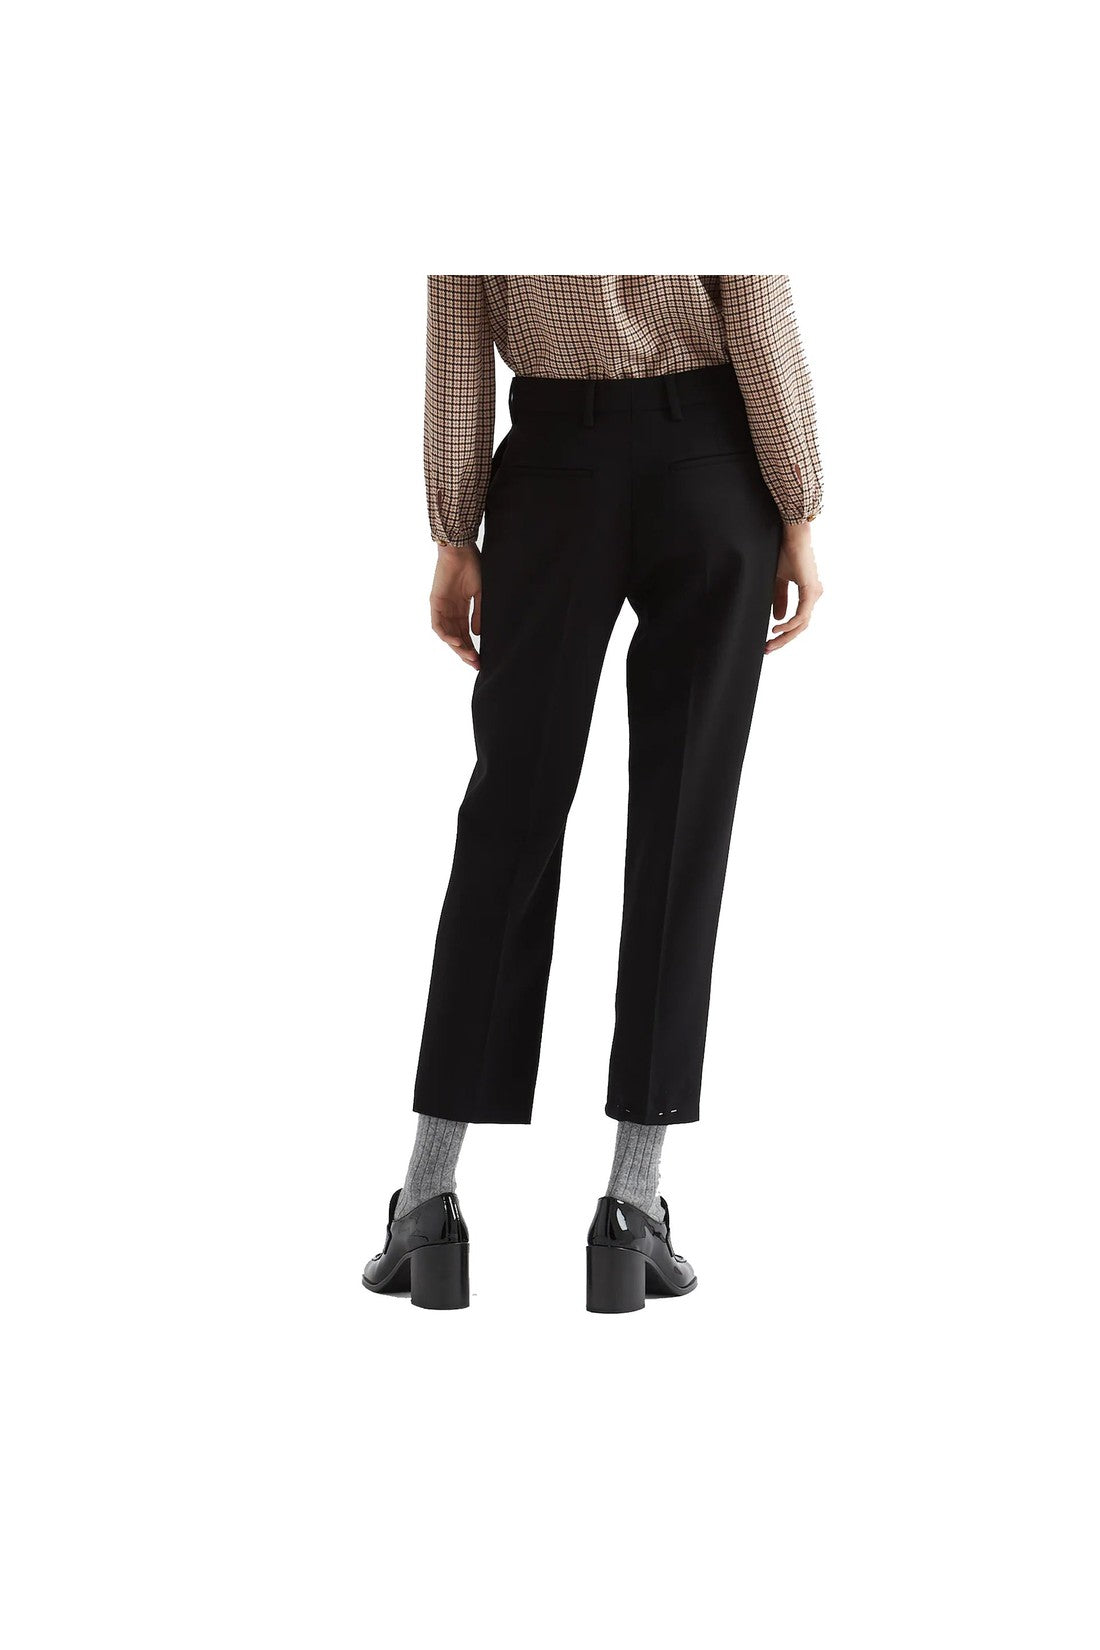 PRADA-Outlet-Sale-Prada Cropped Pants-WOMEN CLOTHING-ARCHIVIST